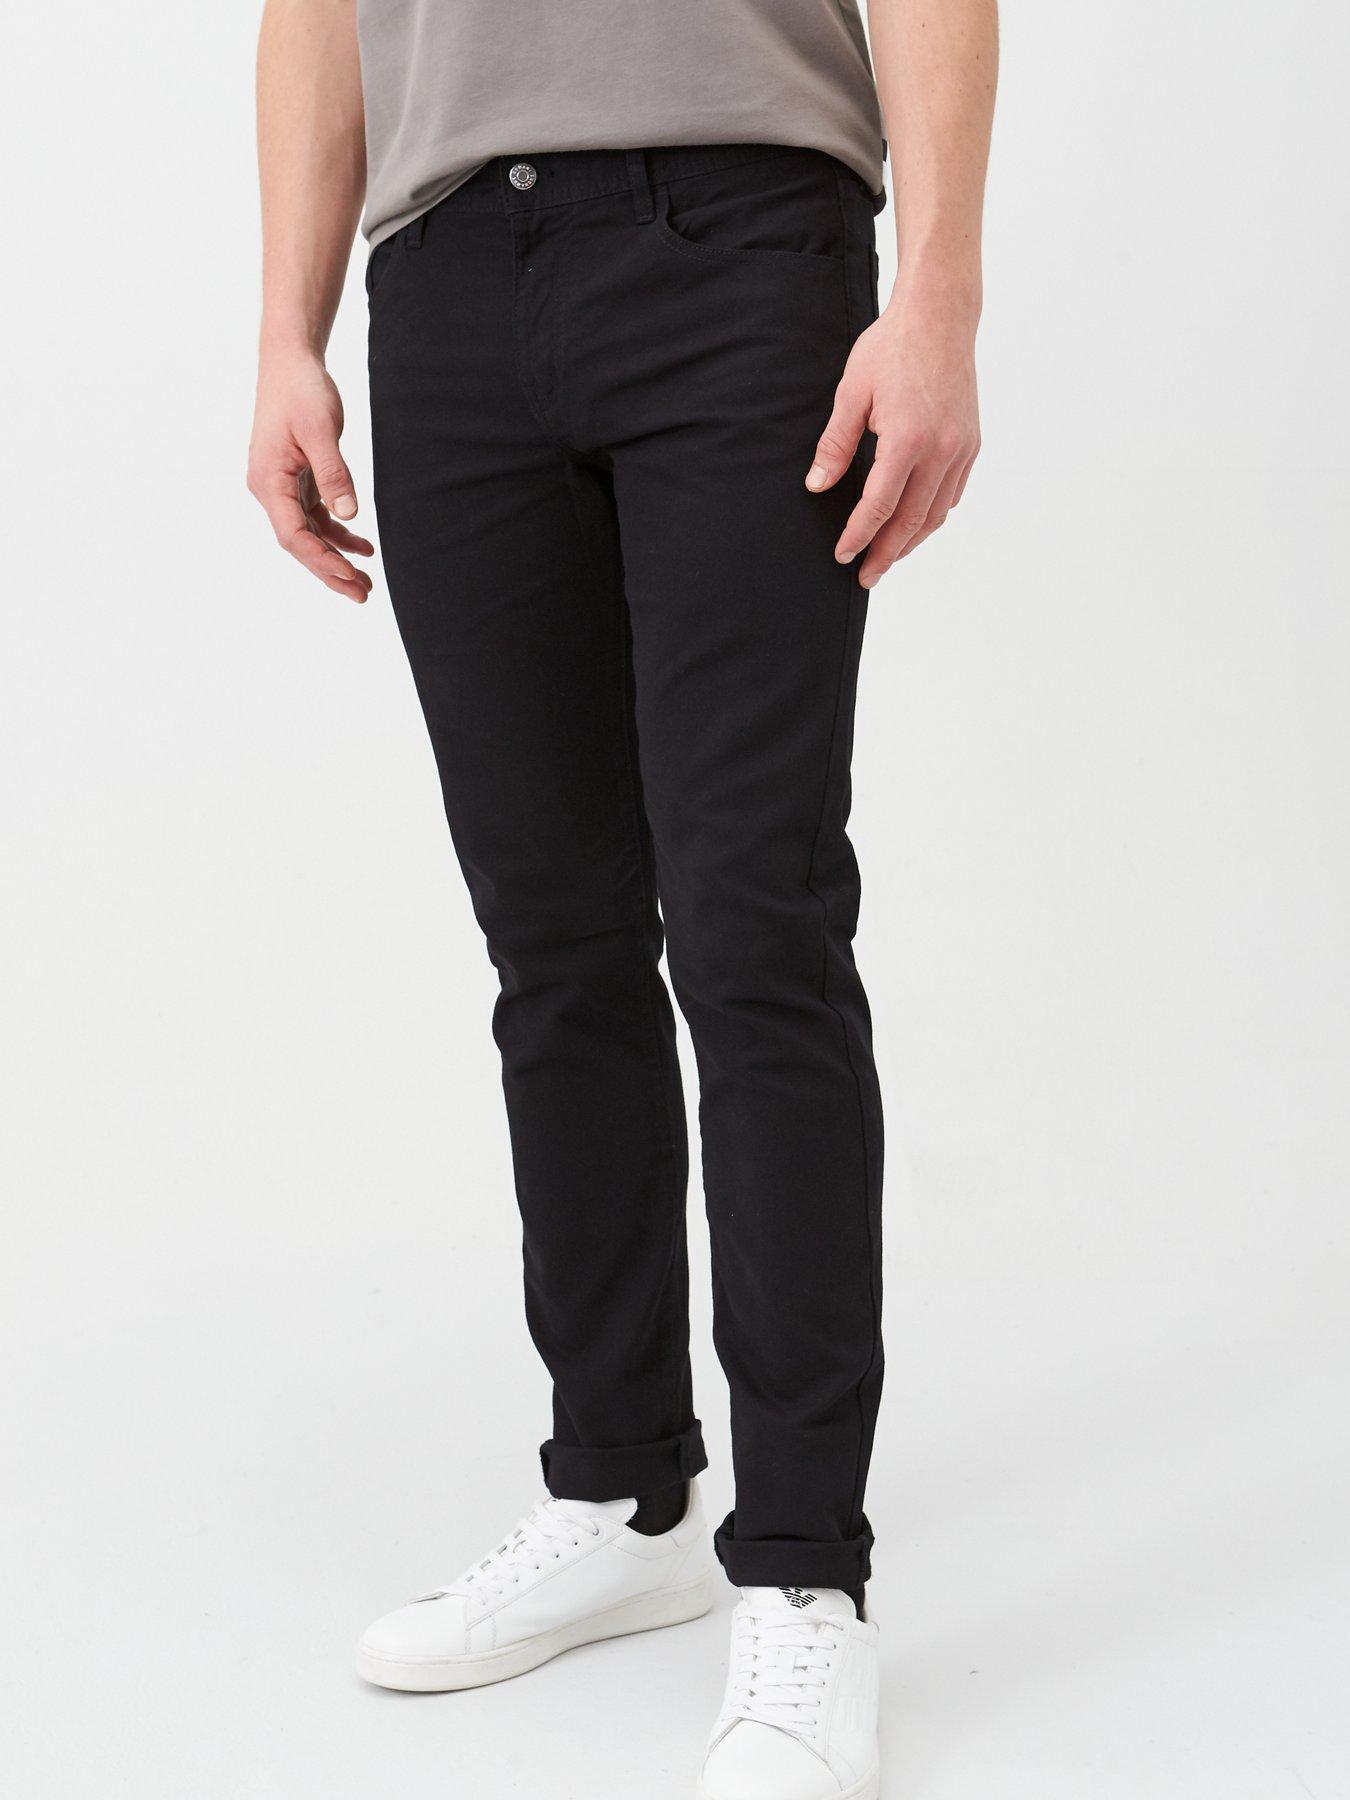 black skinny armani jeans